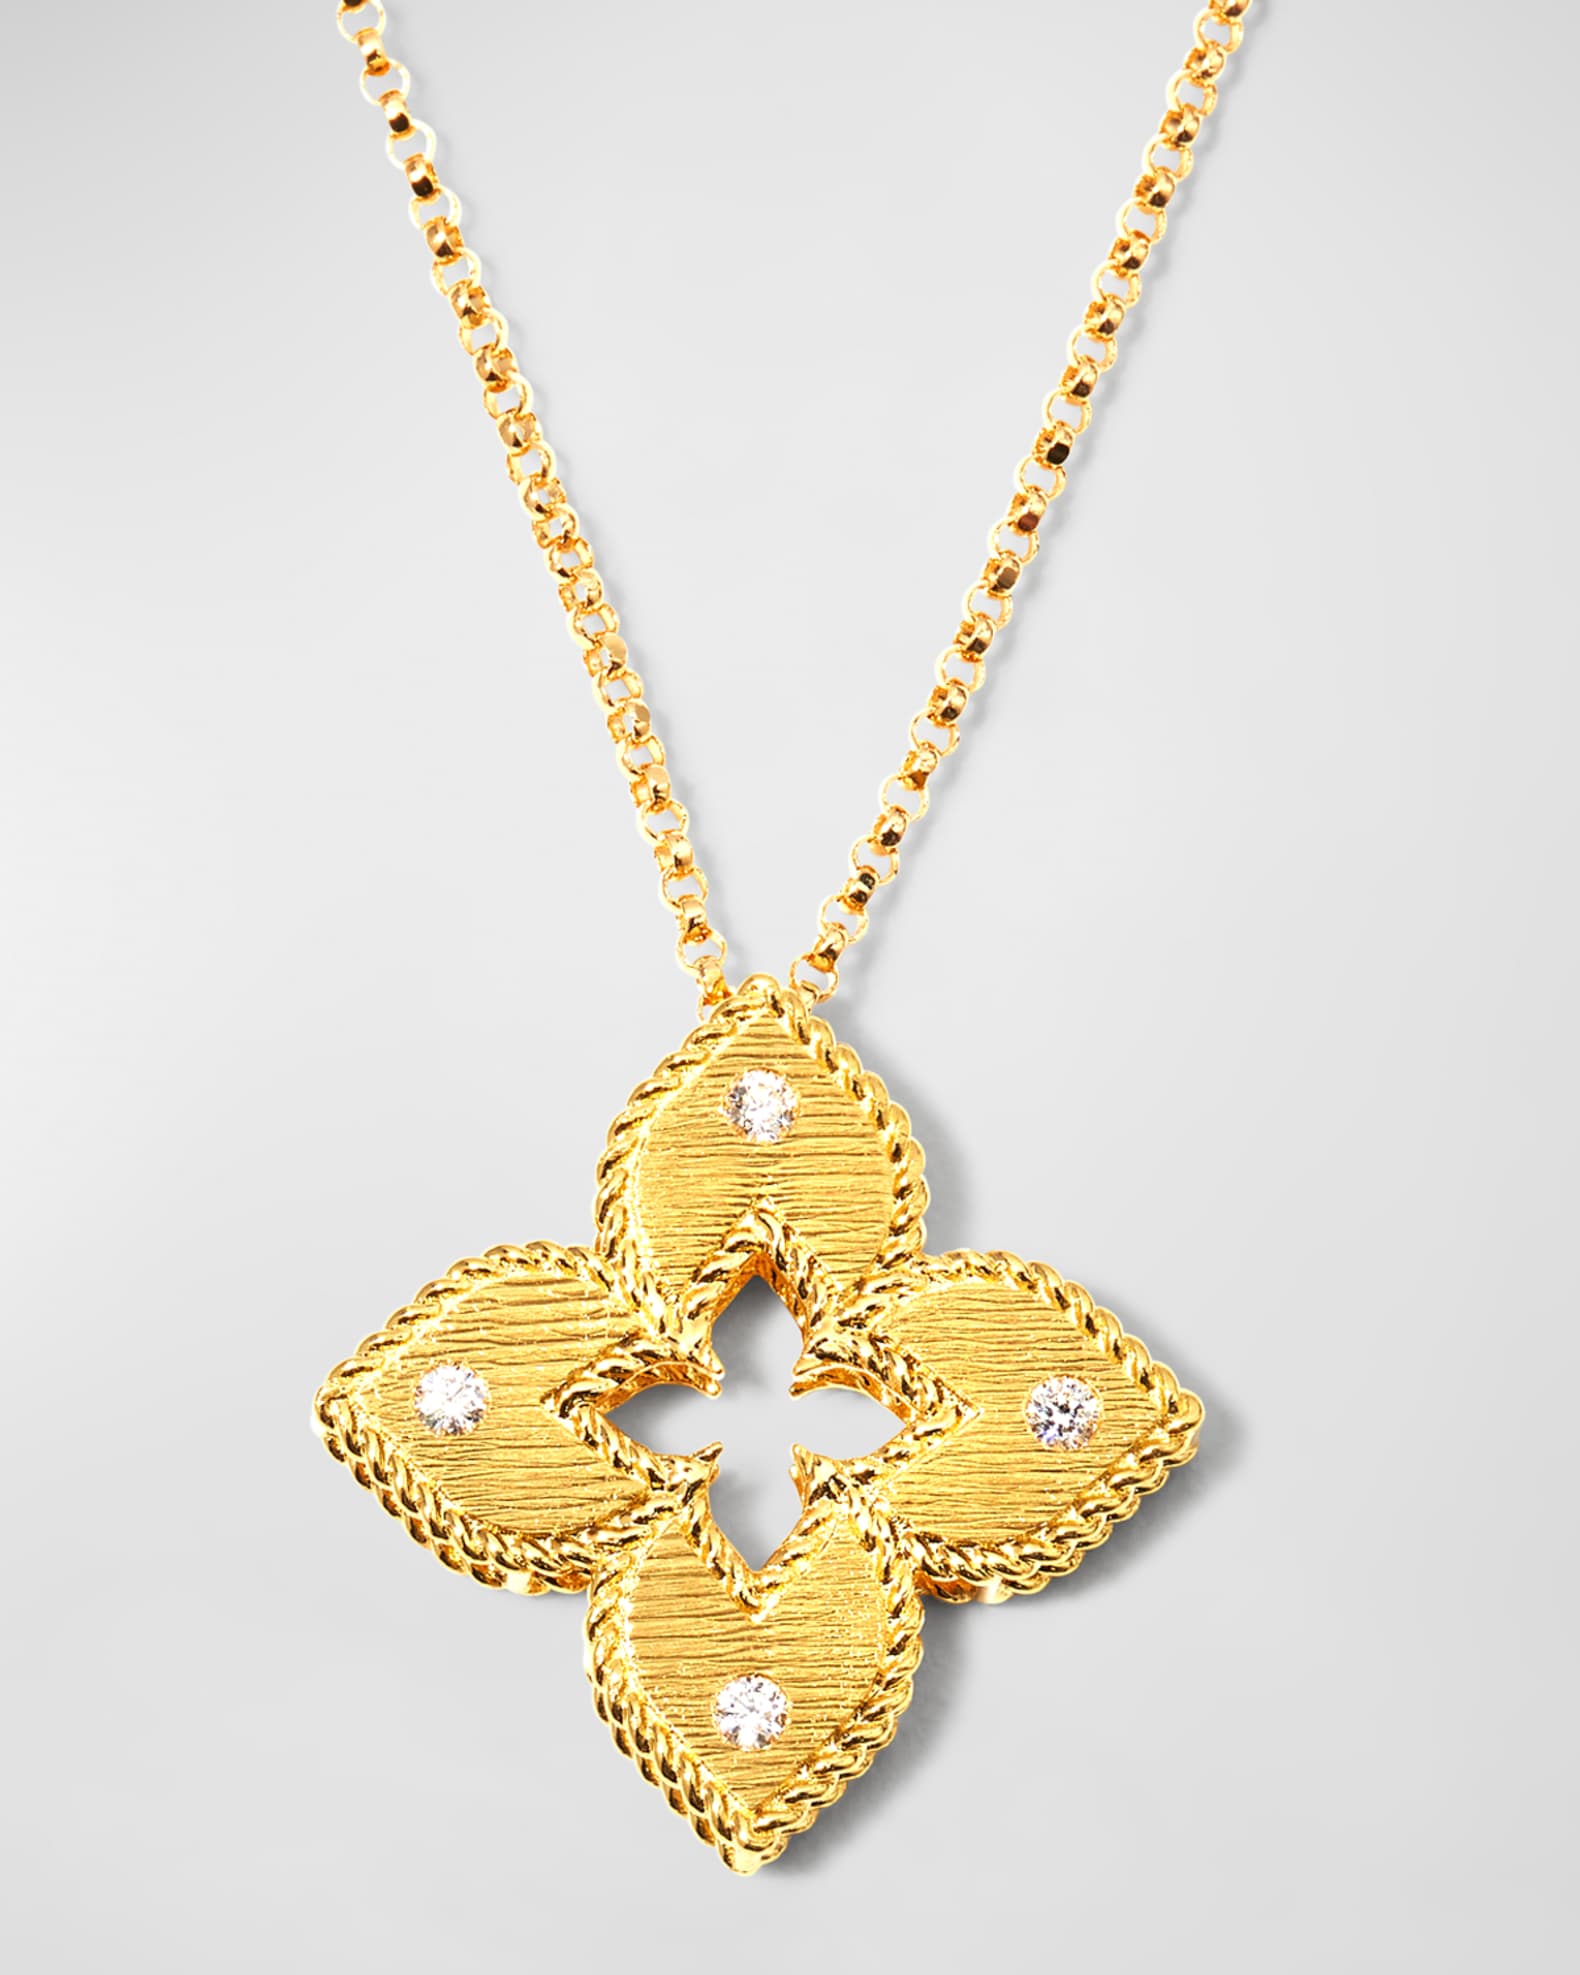 Louis Vuitton 18 Karat White Gold Flower Diamond Necklace